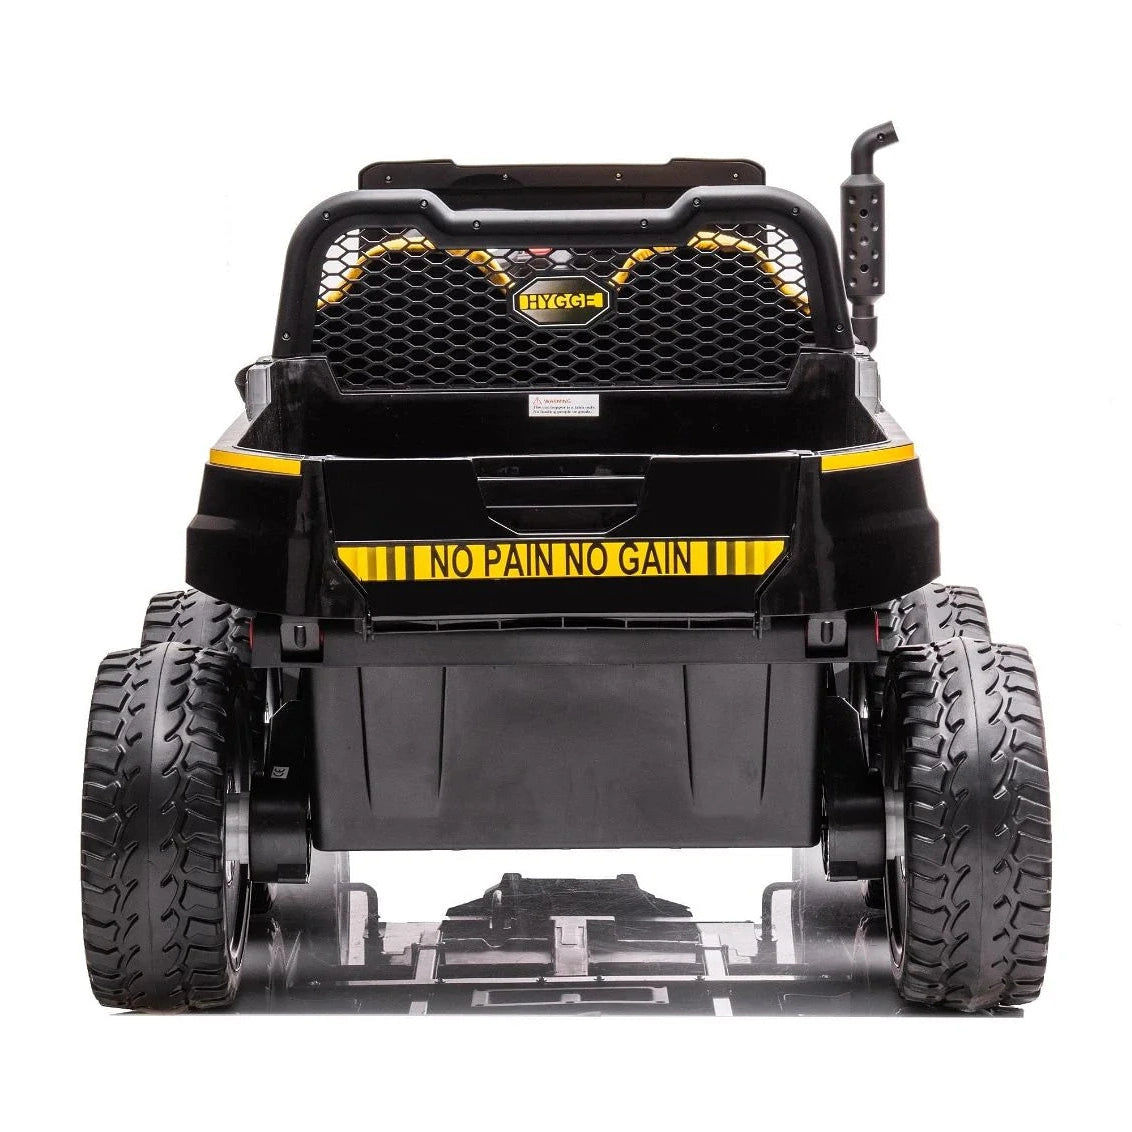 Freddo 24V 6 Wheeler Freddo Tractor Trailer 2 Seater Ride-on With Dump Cart and Parental Remote SpadezStore